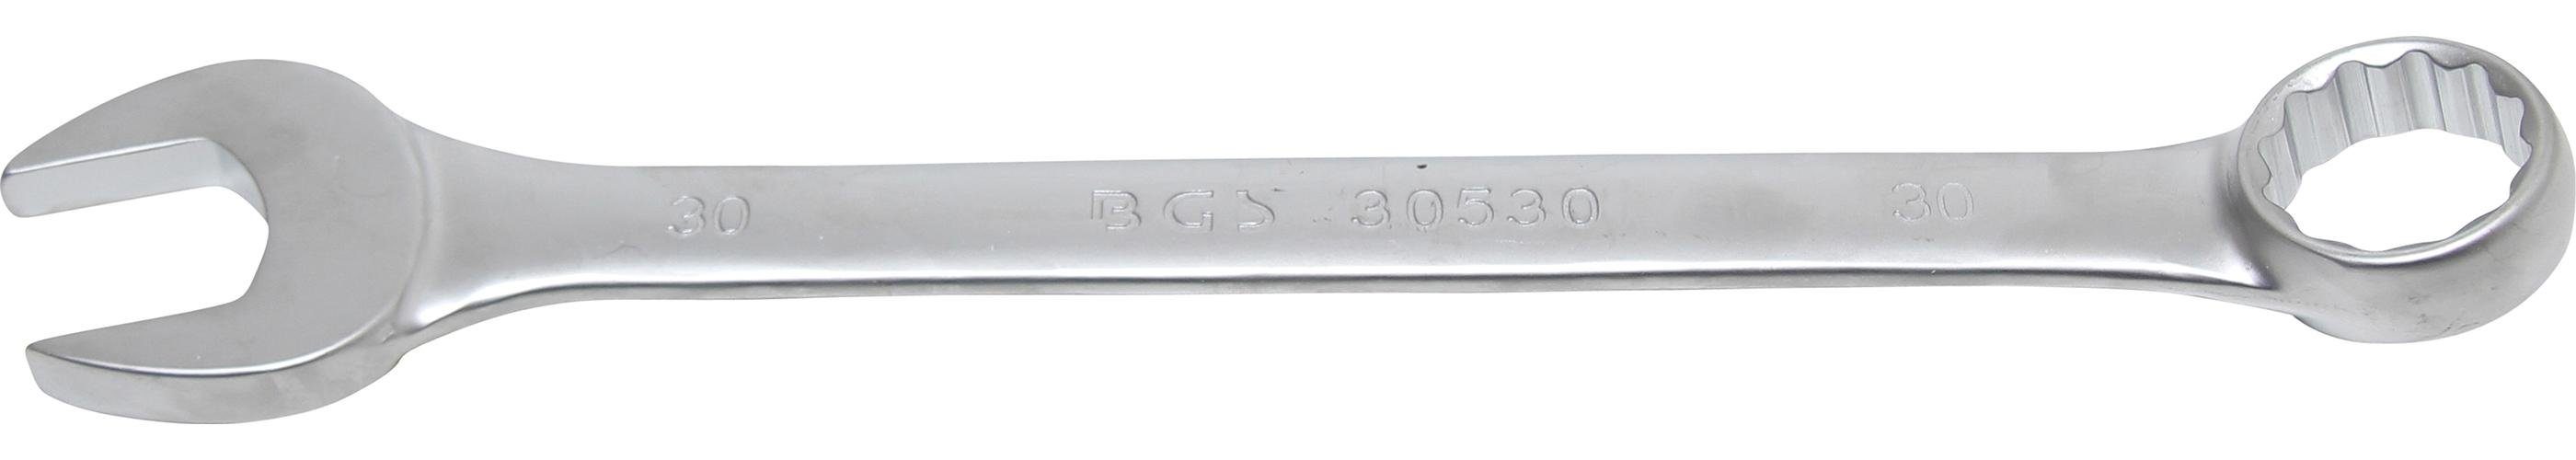 SW technic mm Maulschlüssel Maul-Ringschlüssel, 30 BGS